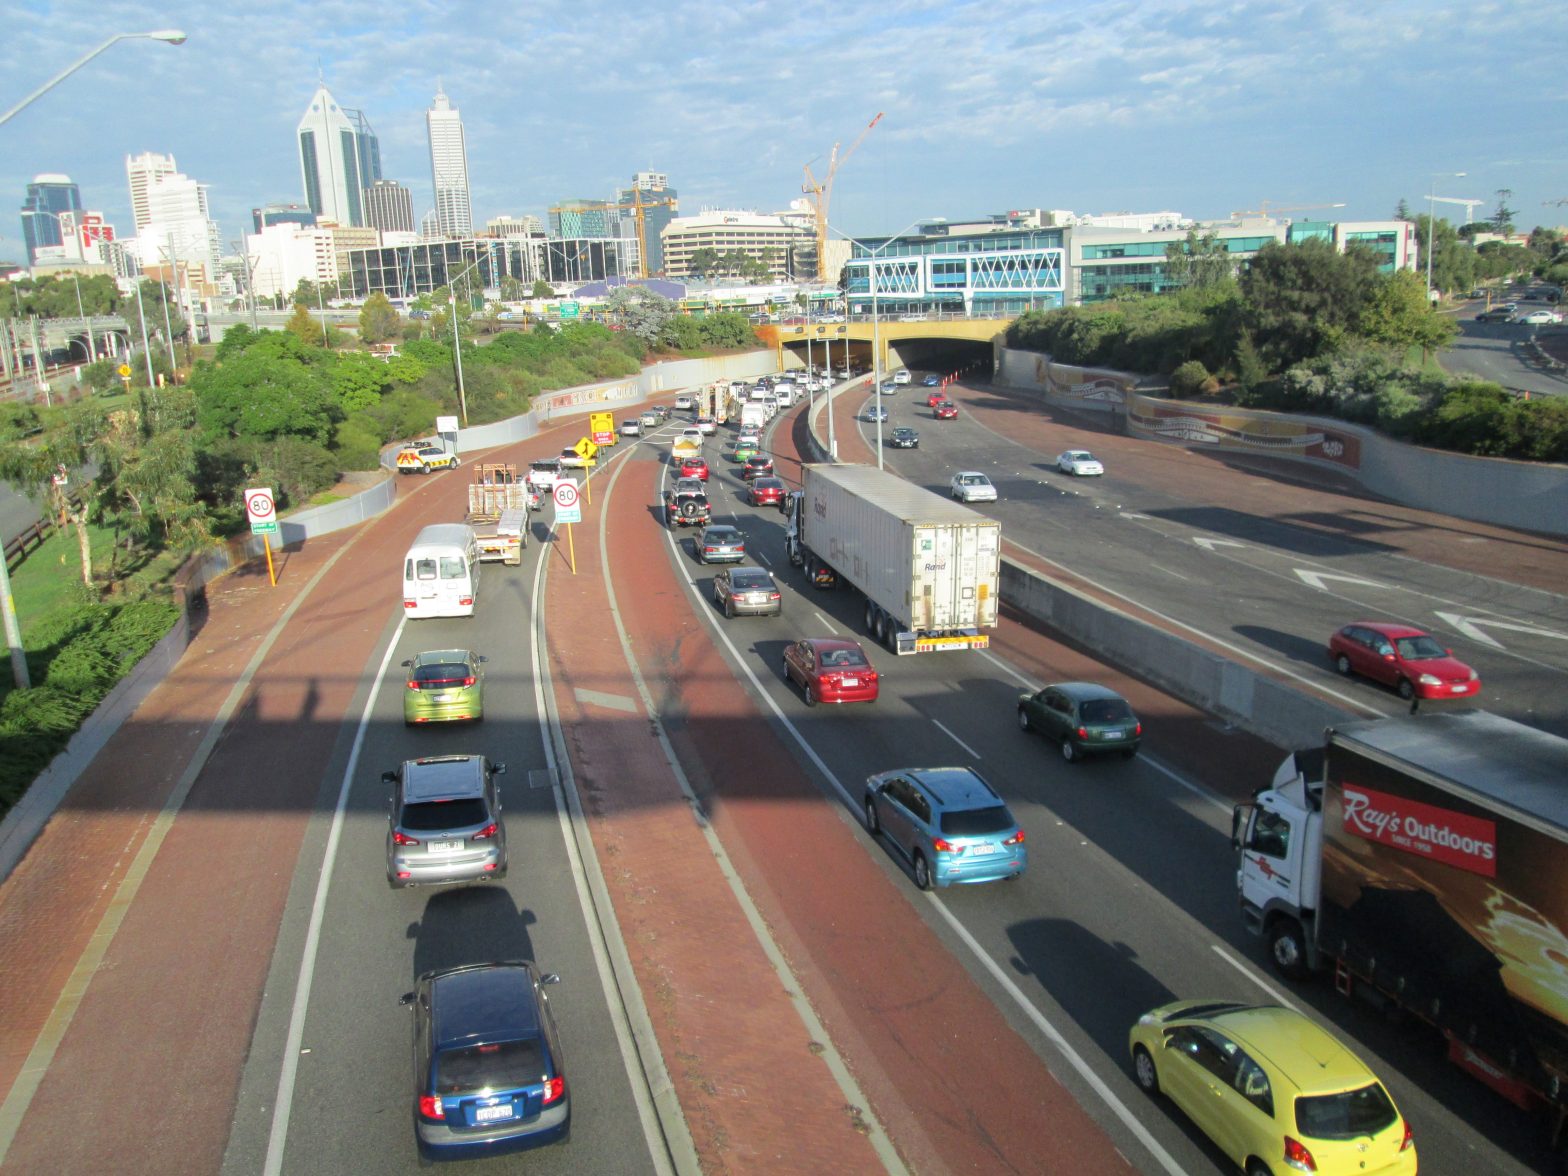 Transport Planning & Traffic Management